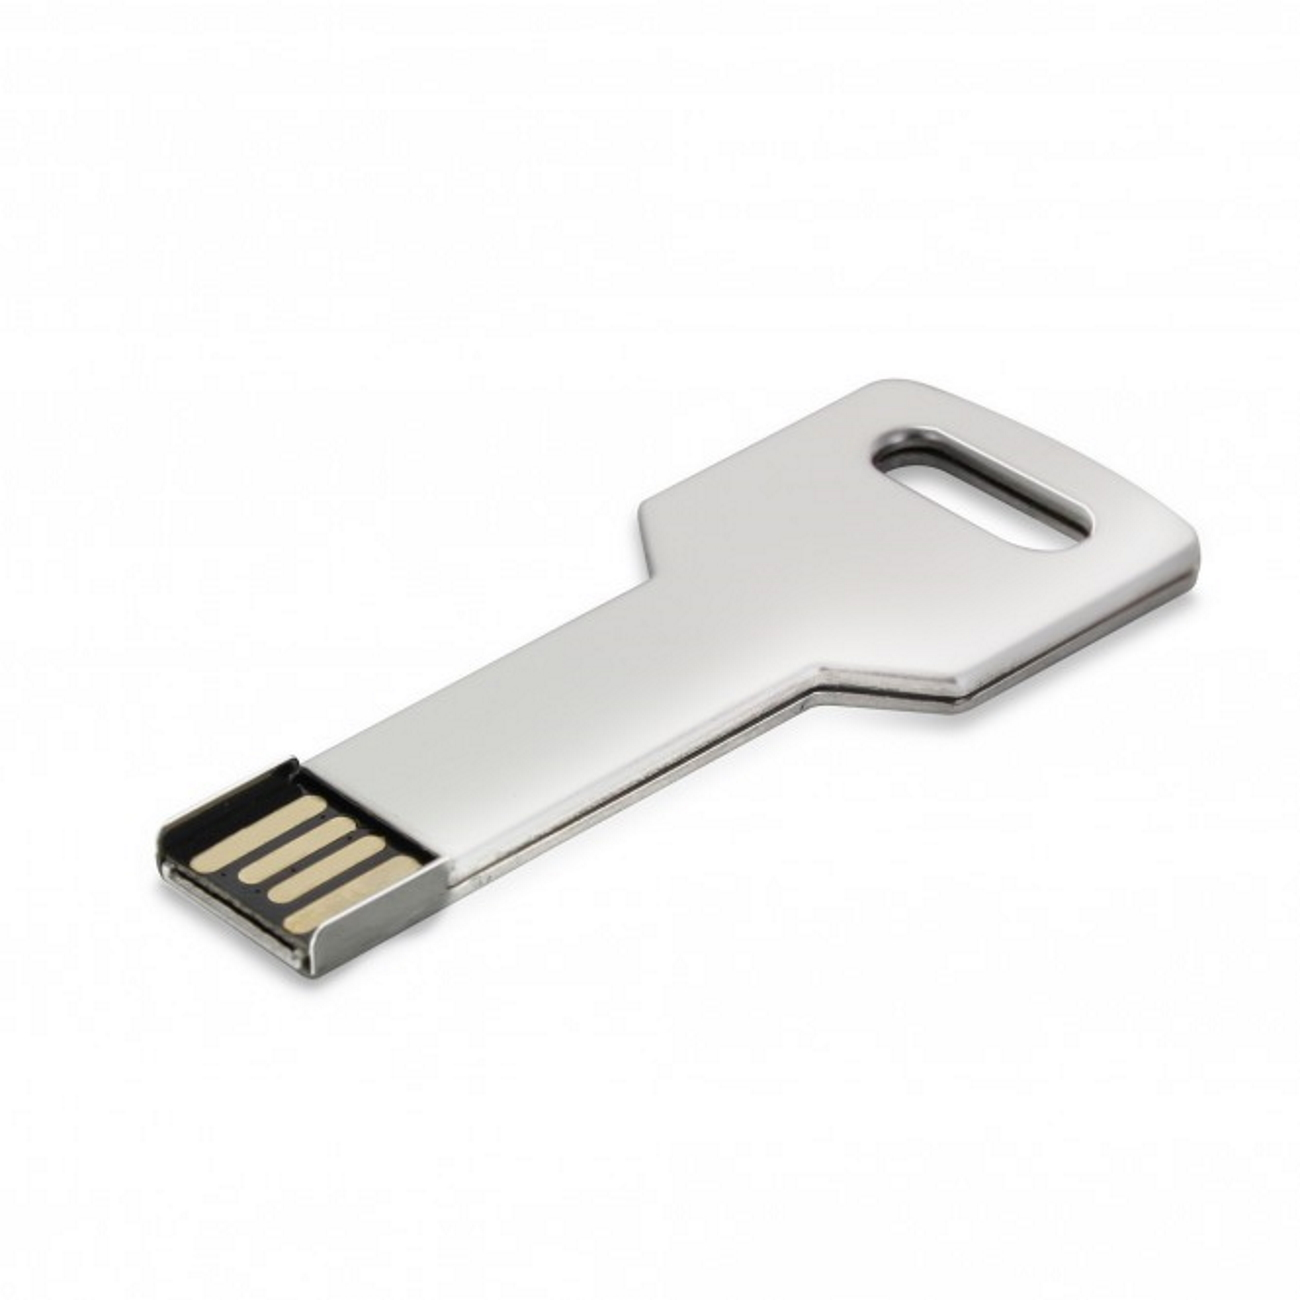 USB GERMANY ®Schlüssel Key GB) 8 USB-Stick (Silber